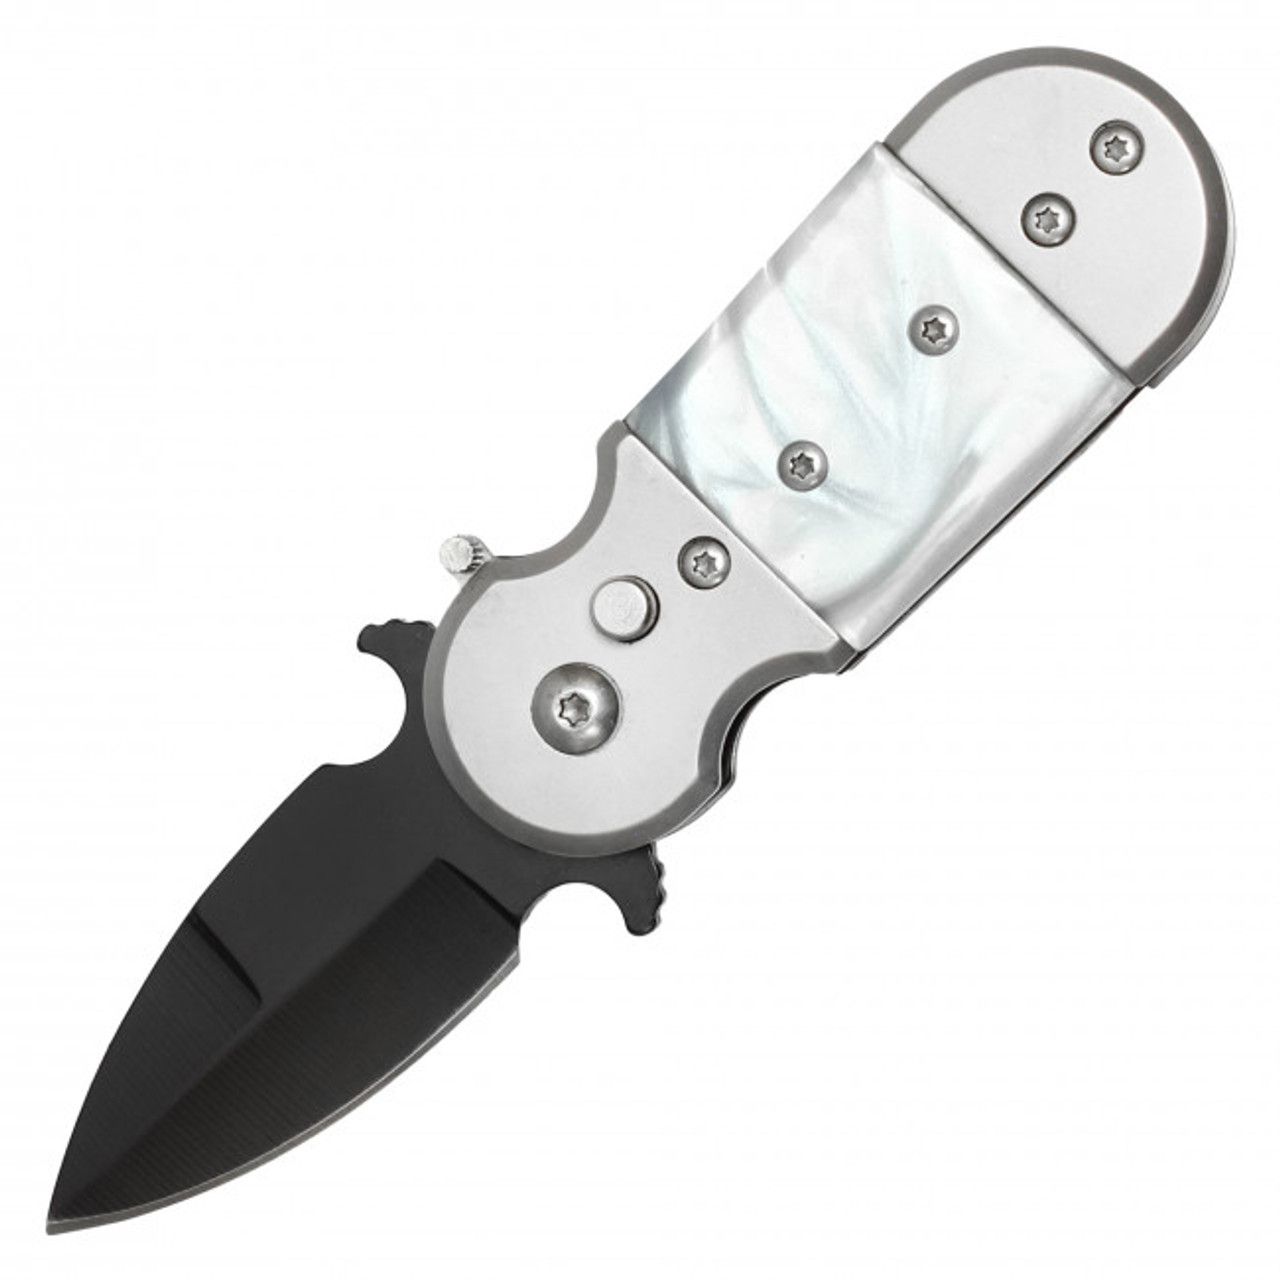 5" Closed 1.75" Blade Micro Push Knife - Chrome